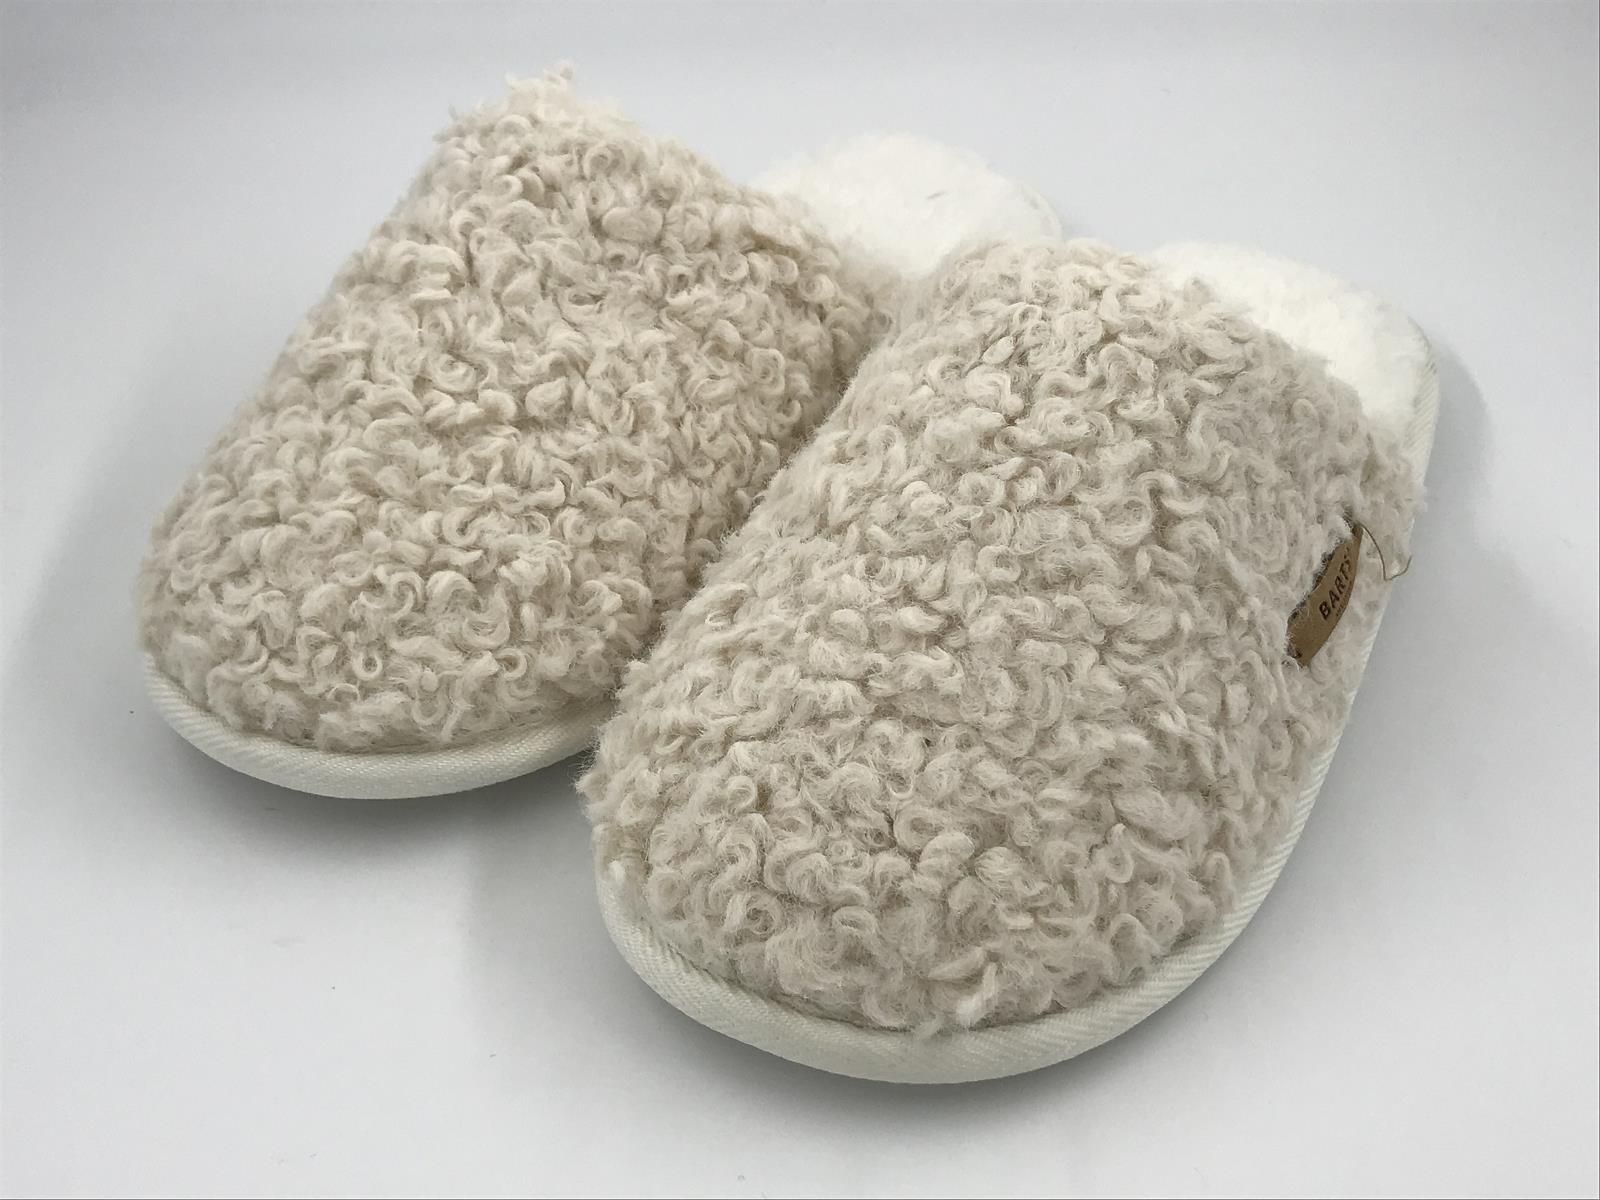 Barts Vensie slippers cream (0299510) - Stiletto Schoenen (Oudenaarde)